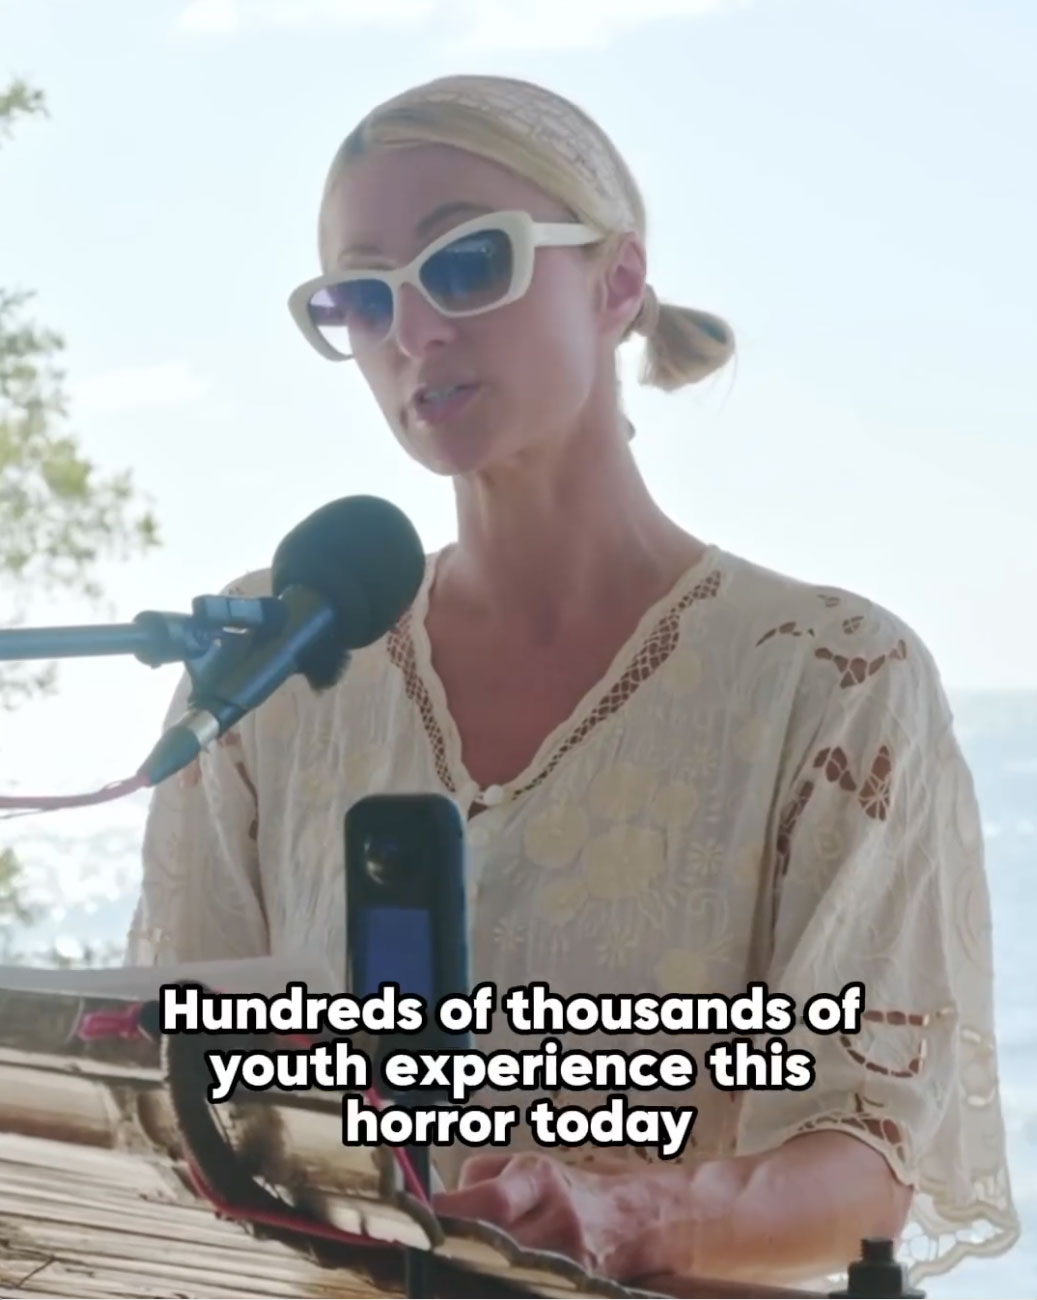 Paris Hilton Jamaica speech